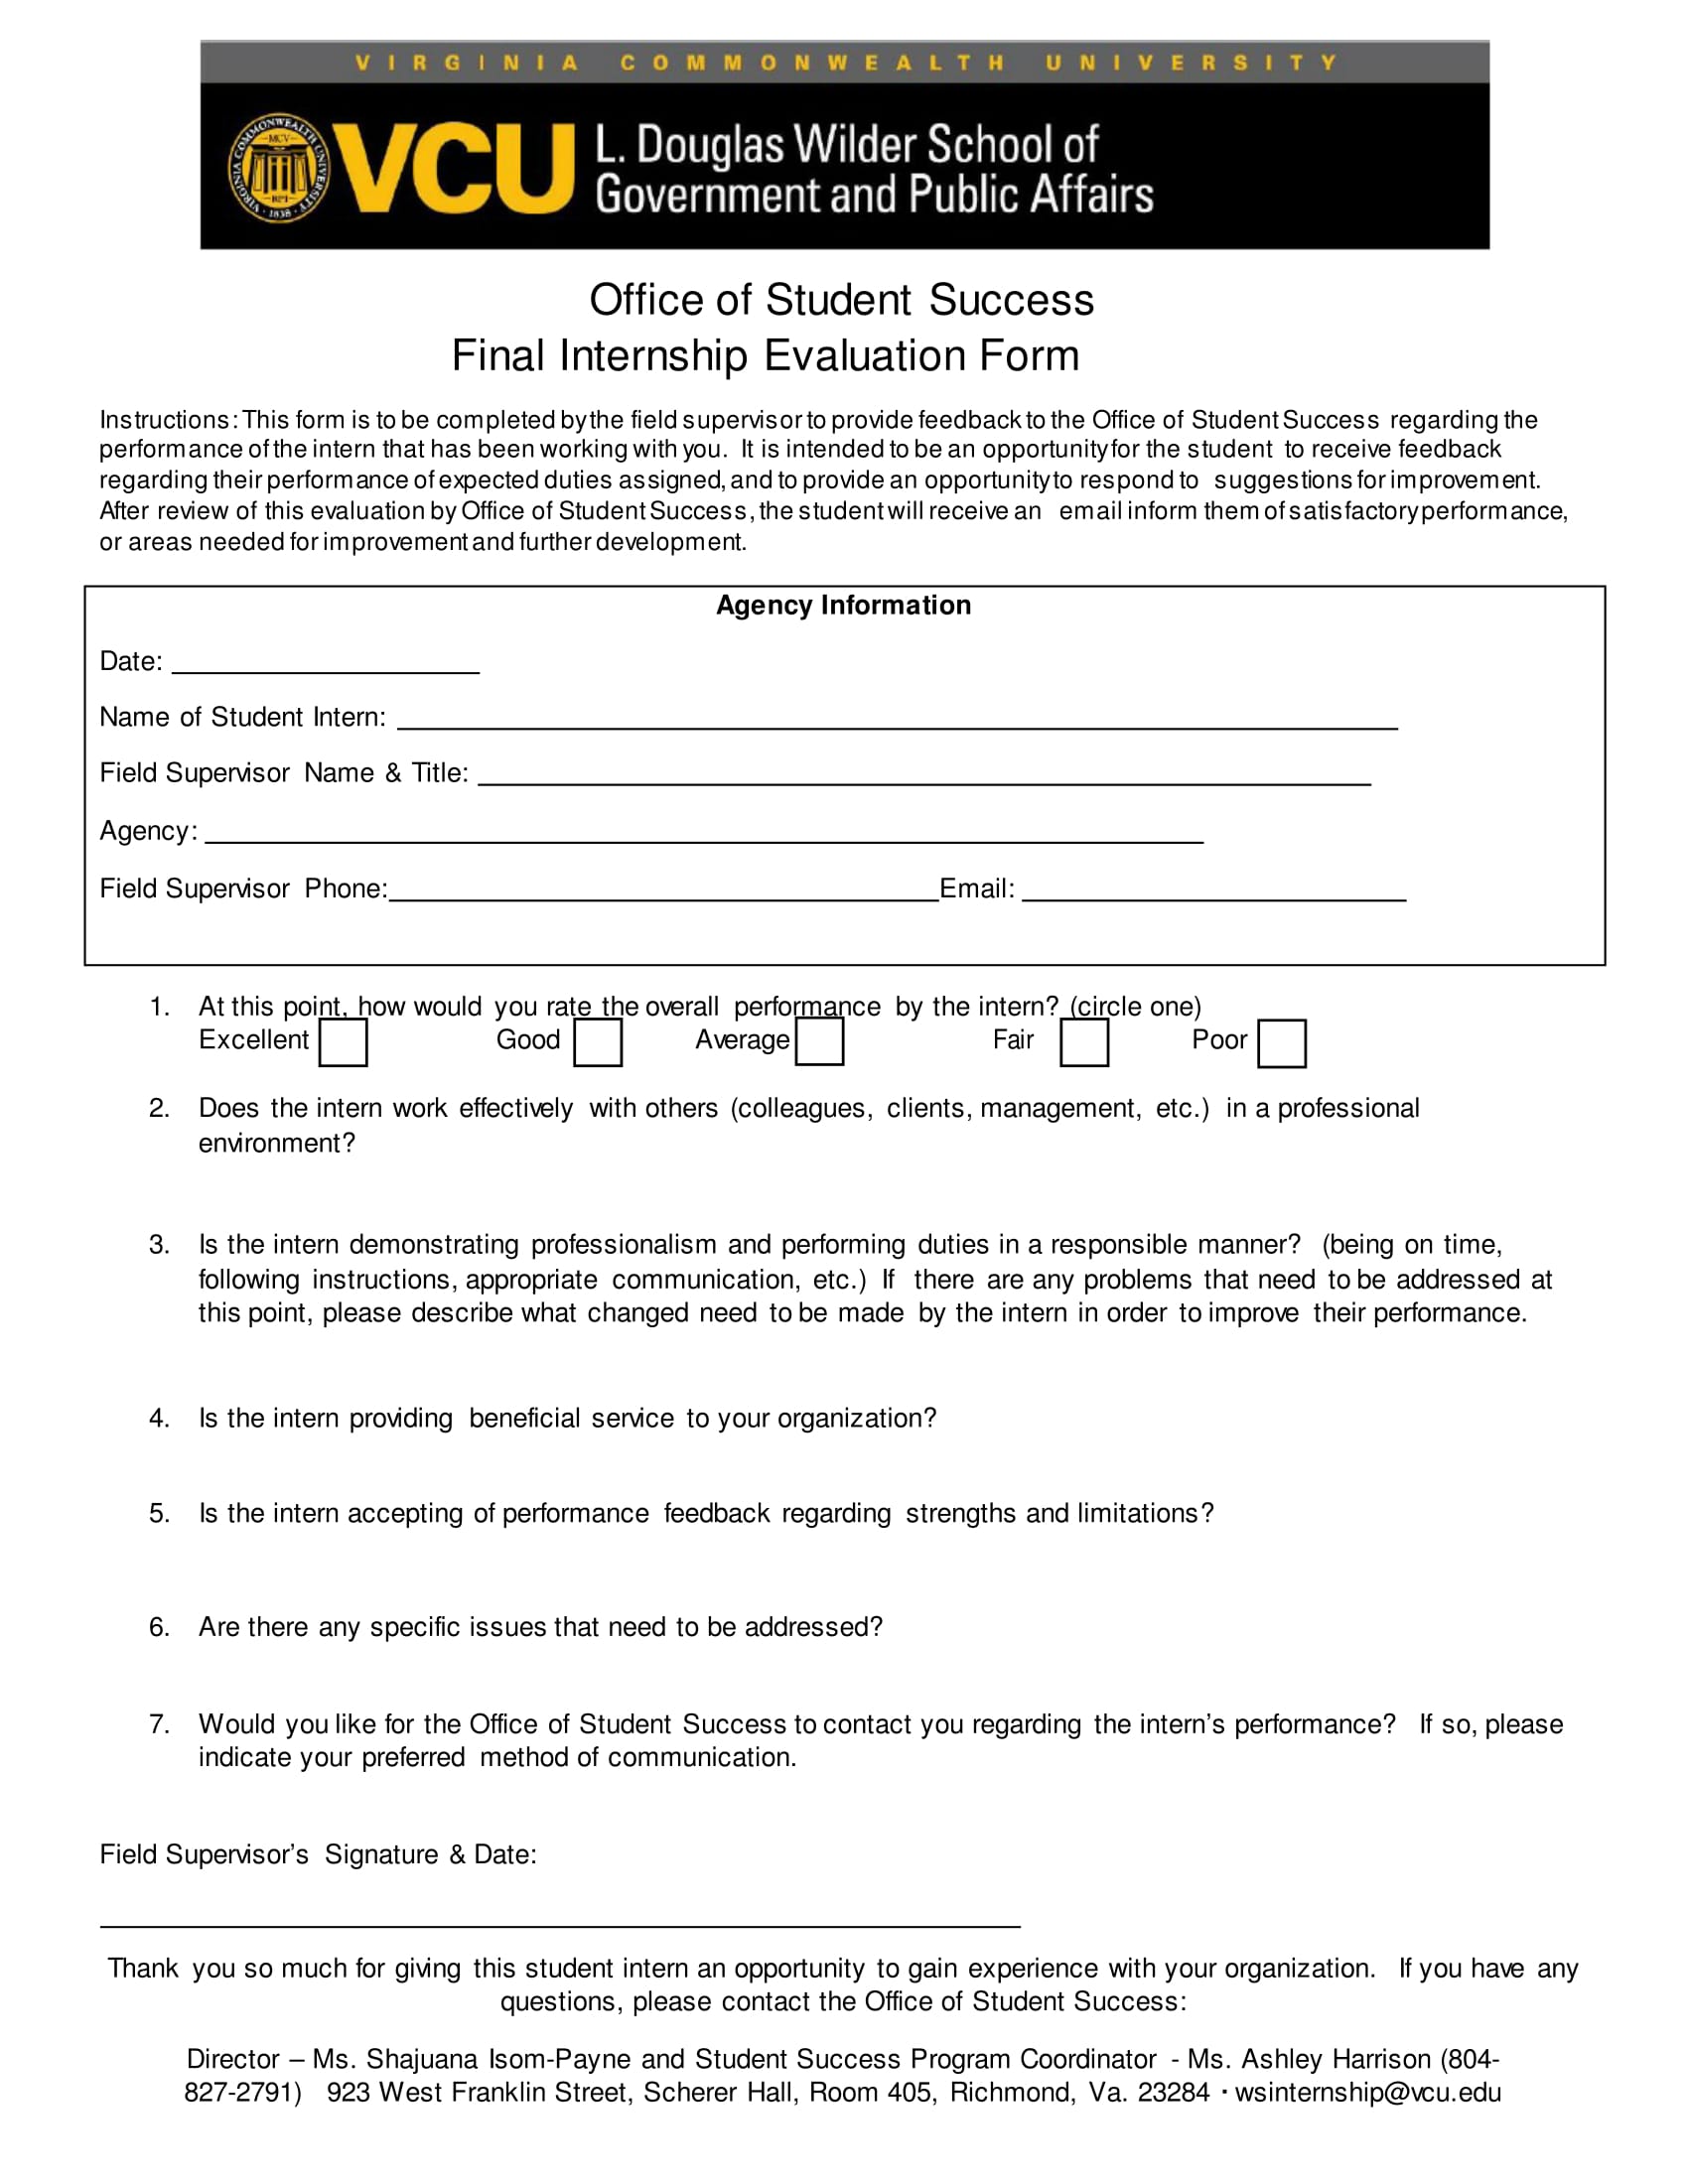 final internship evaluation form 1